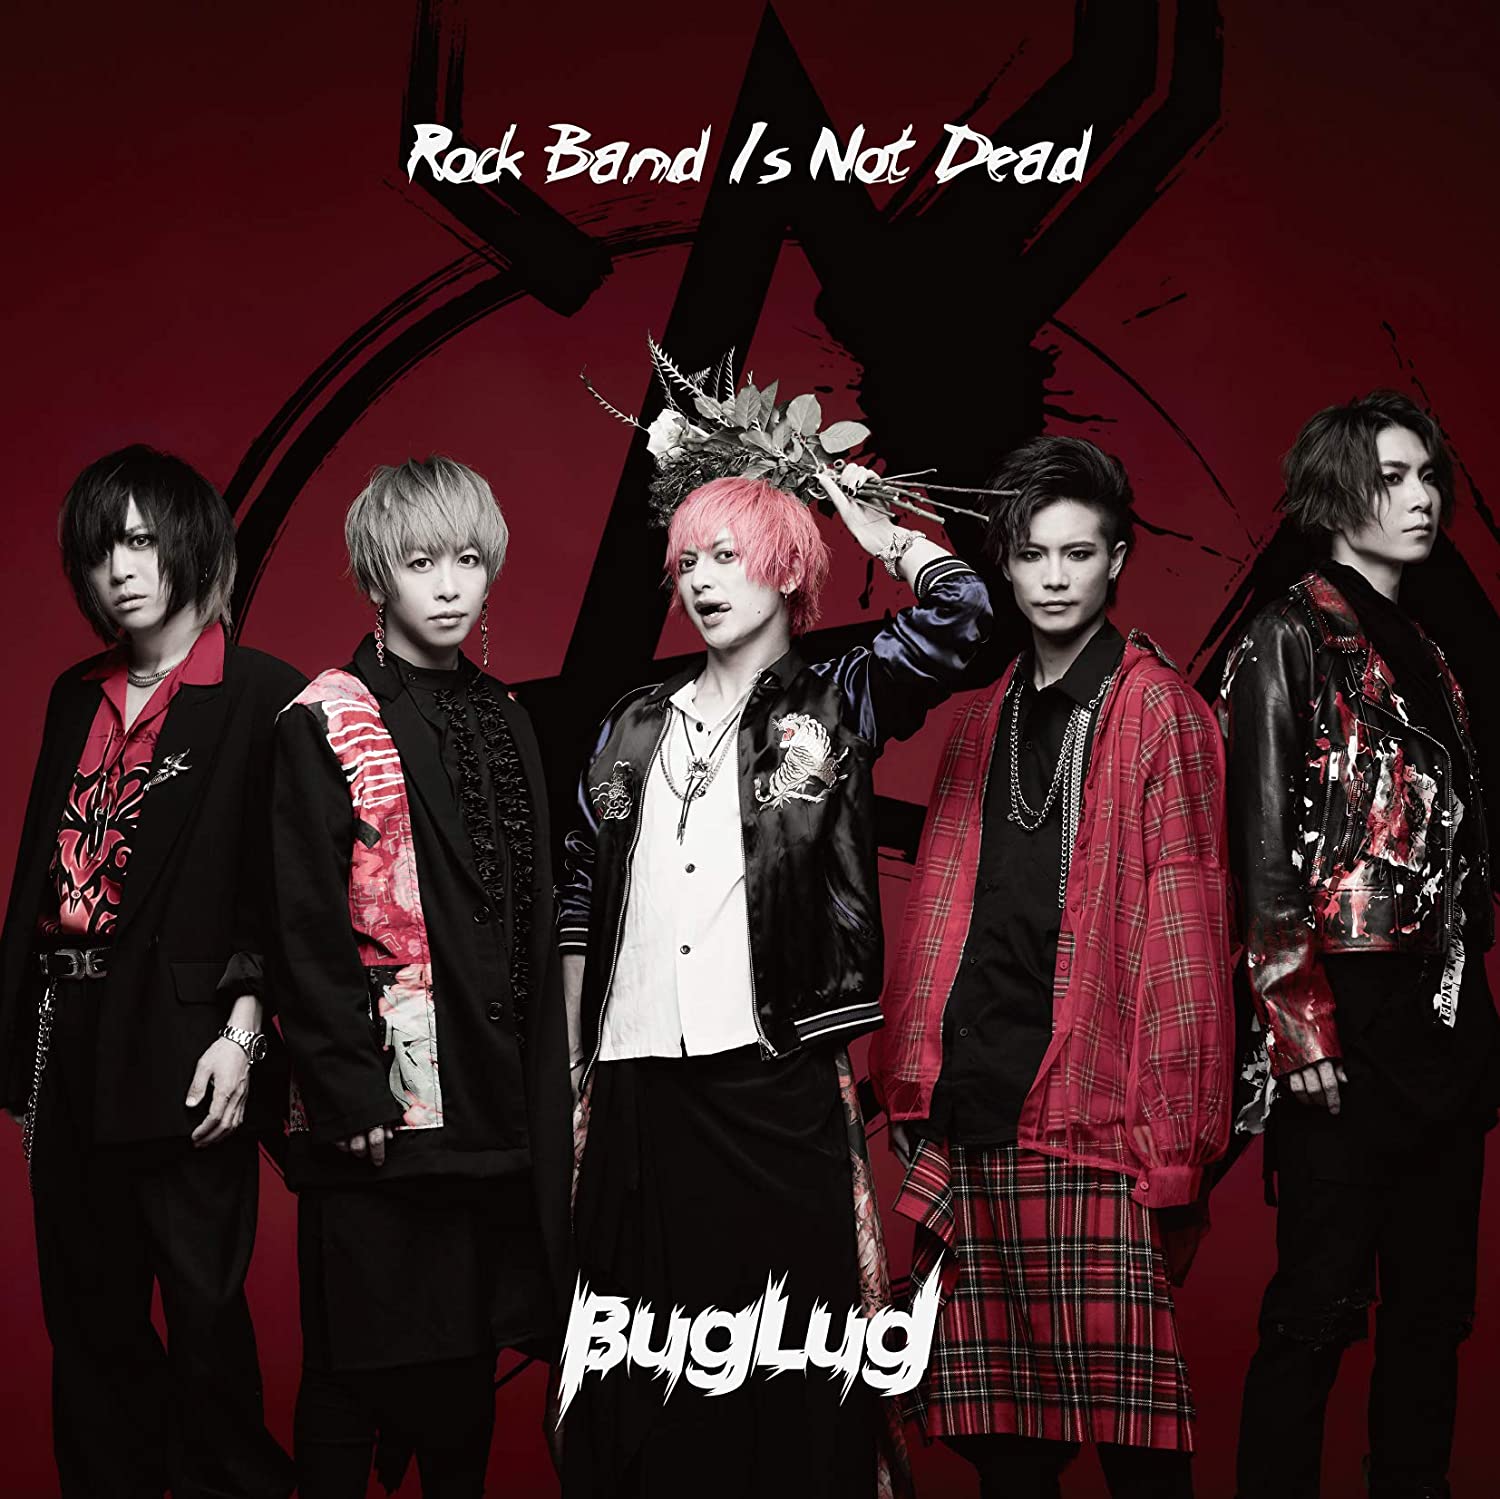 BugLug/Rock Band Is Not Dead